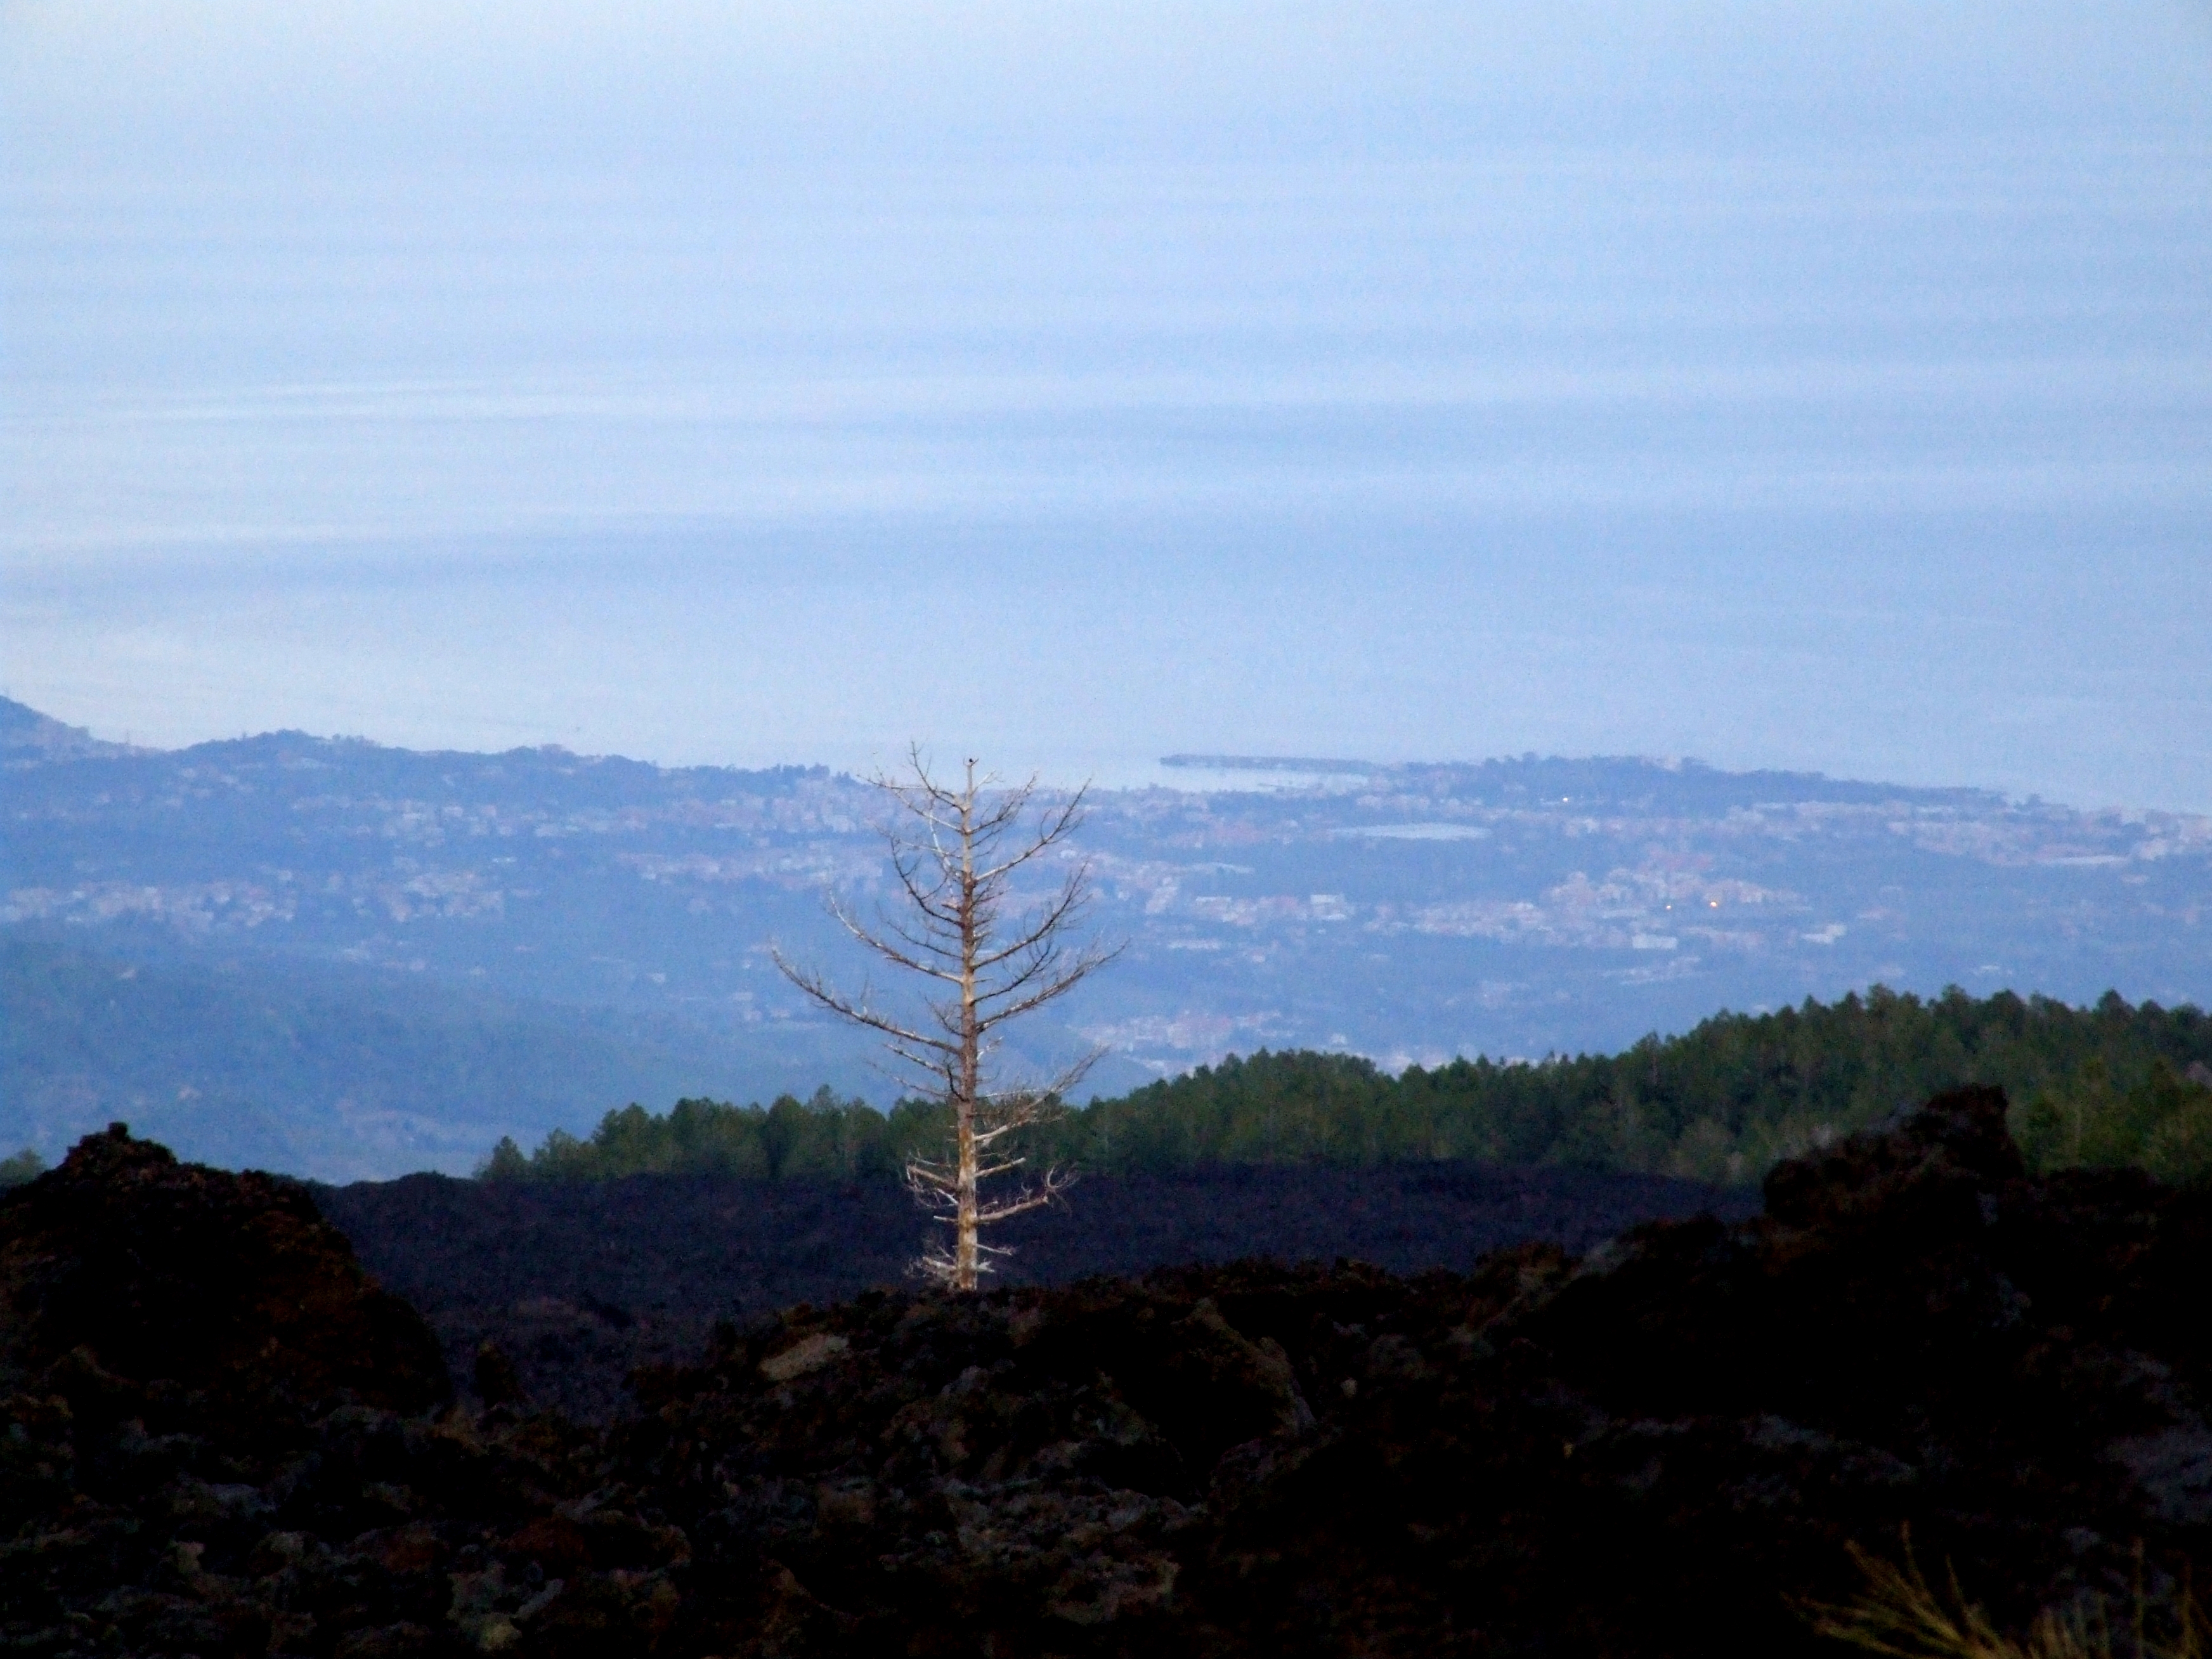 Etna-Volcano-Sicily-Italy - Creative Commons by gnuckx, Bebo, Resolution, News, “No, HQ Photo